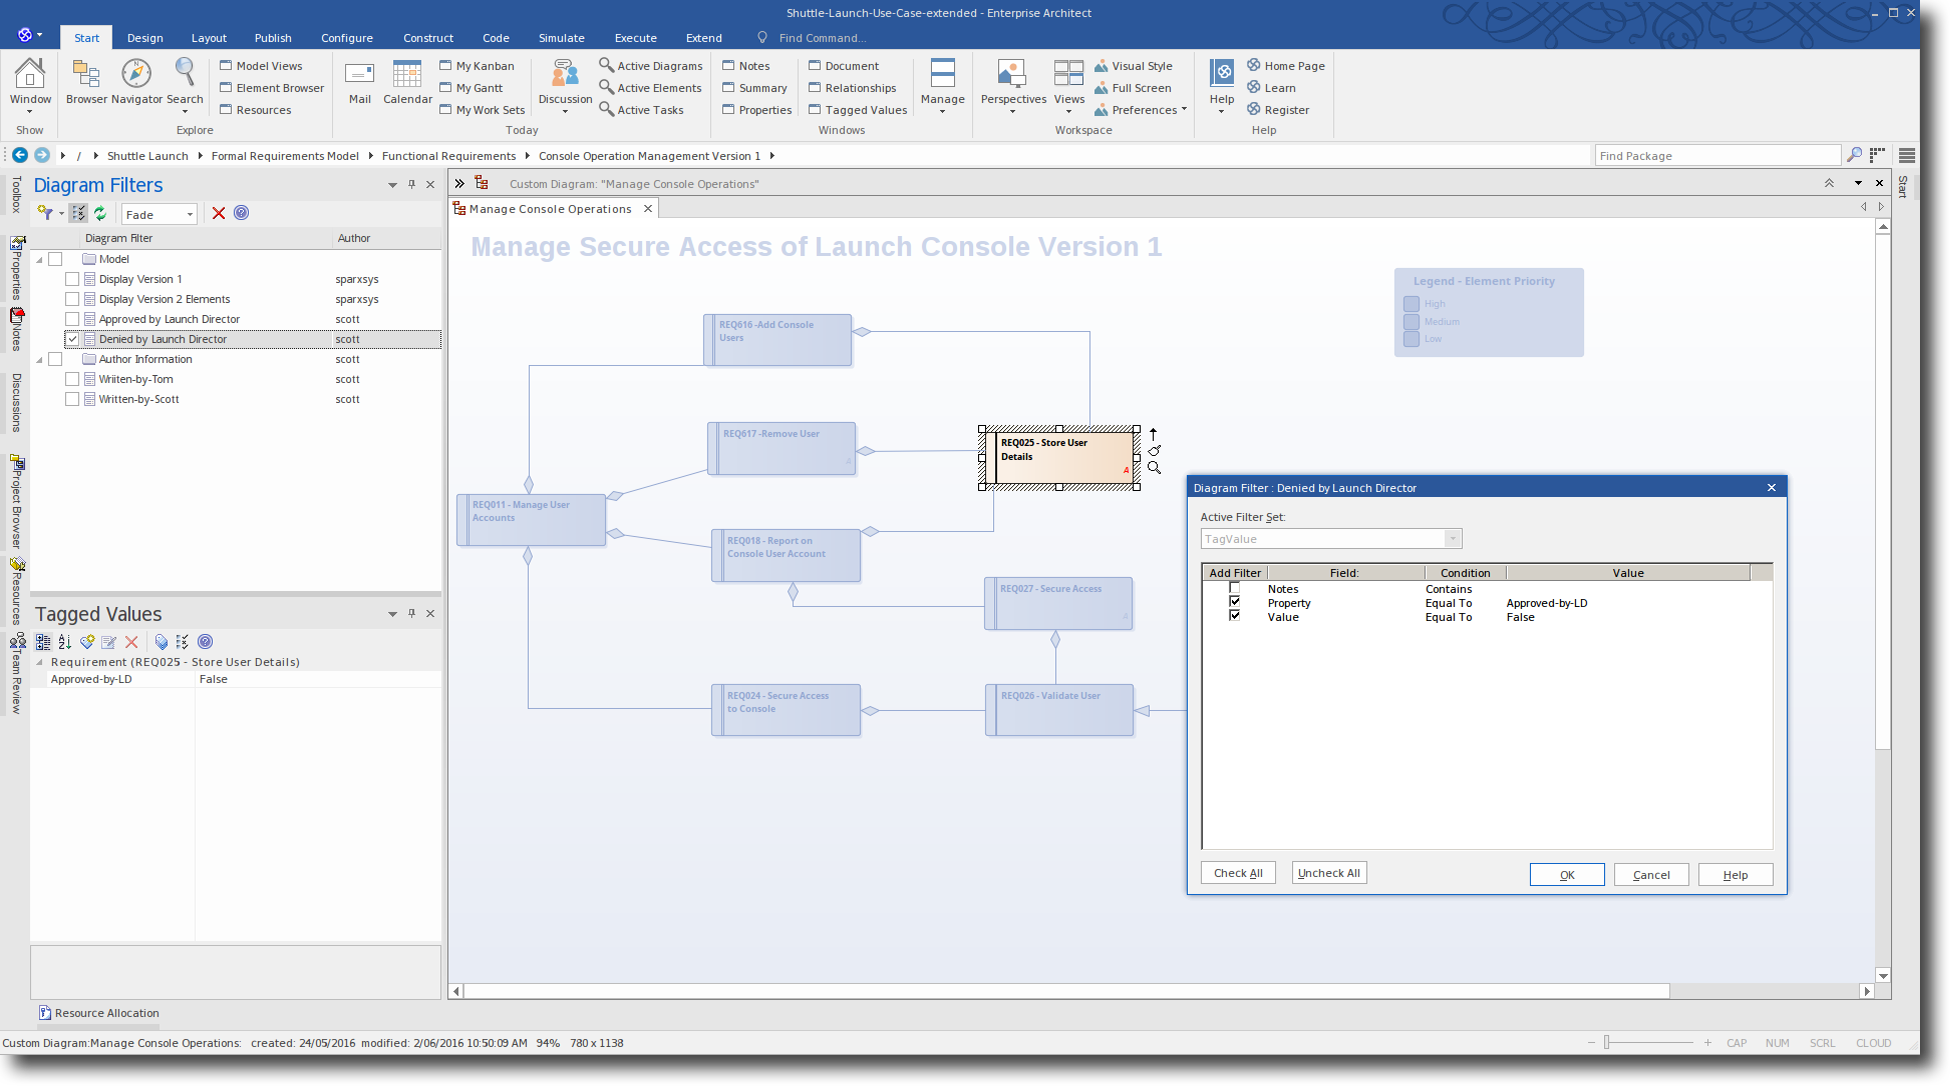 Enterprise Architect 13: Diagram Filtering - Configure Diagram Filter for false entry